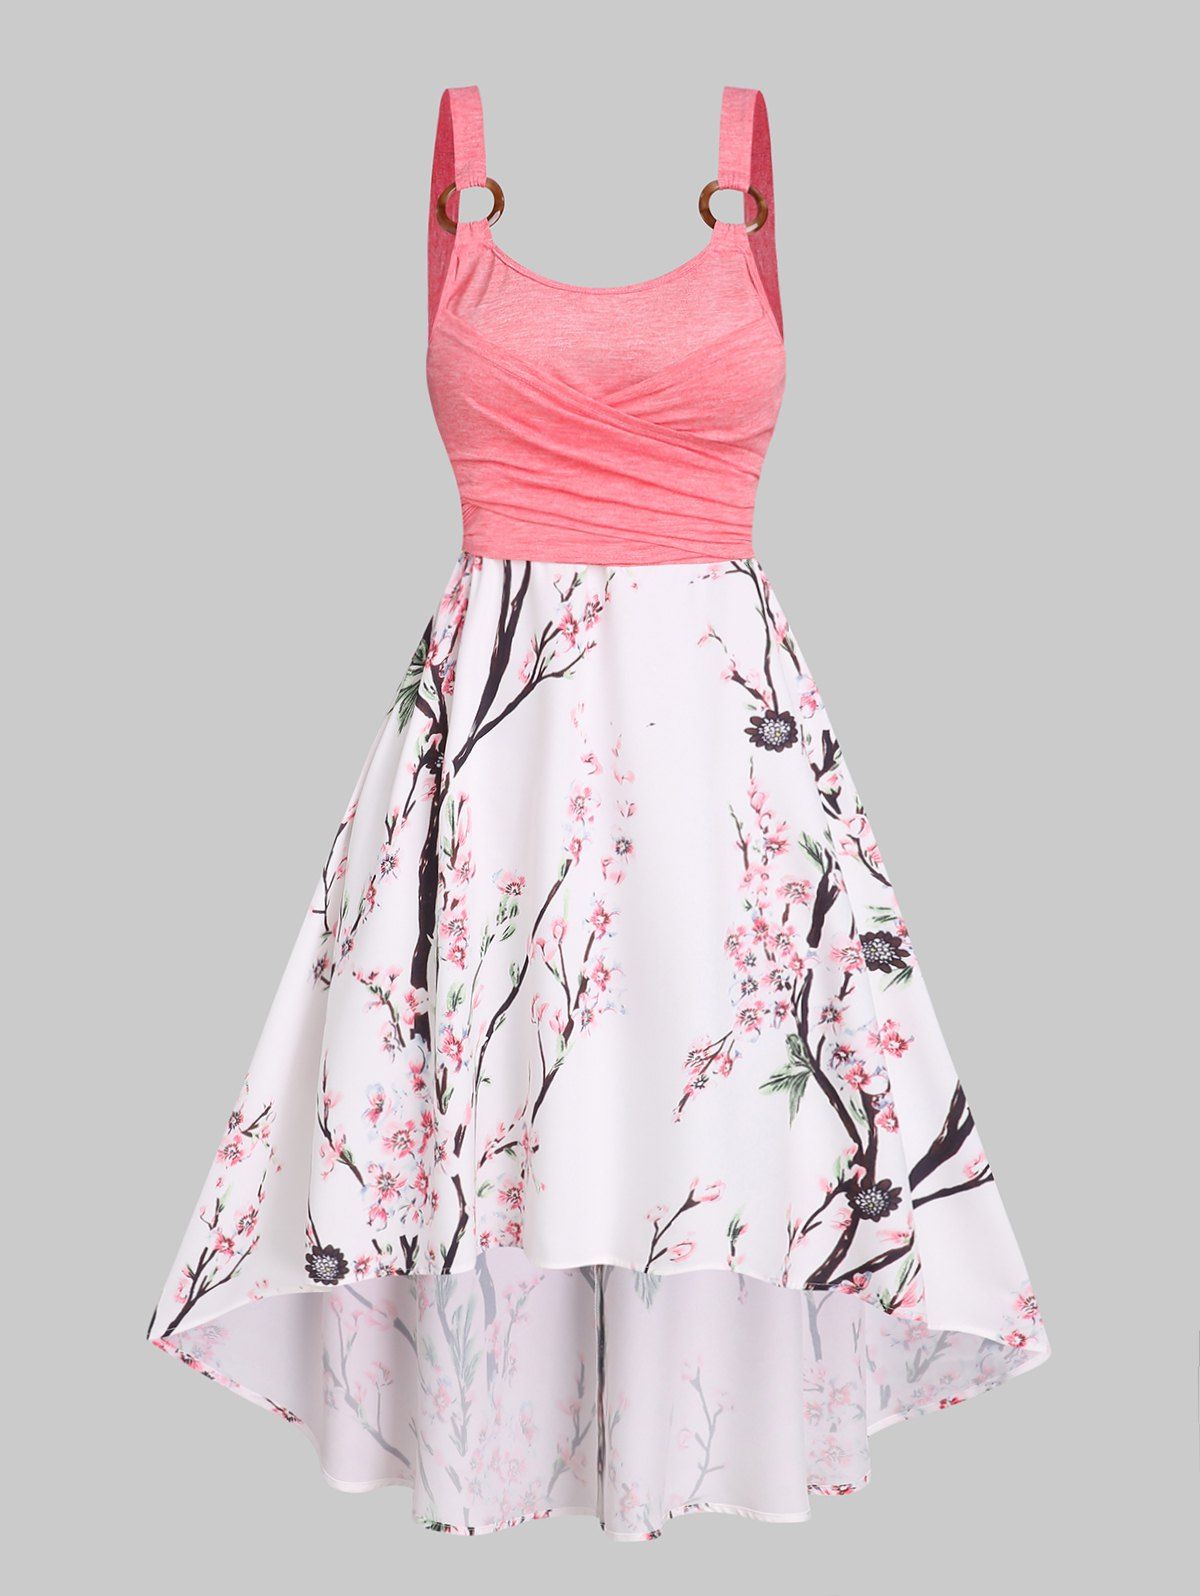 Peach Flower Blossom Print A Line Sundress High Low Crossover O Ring Dress - LIGHT PINK XL